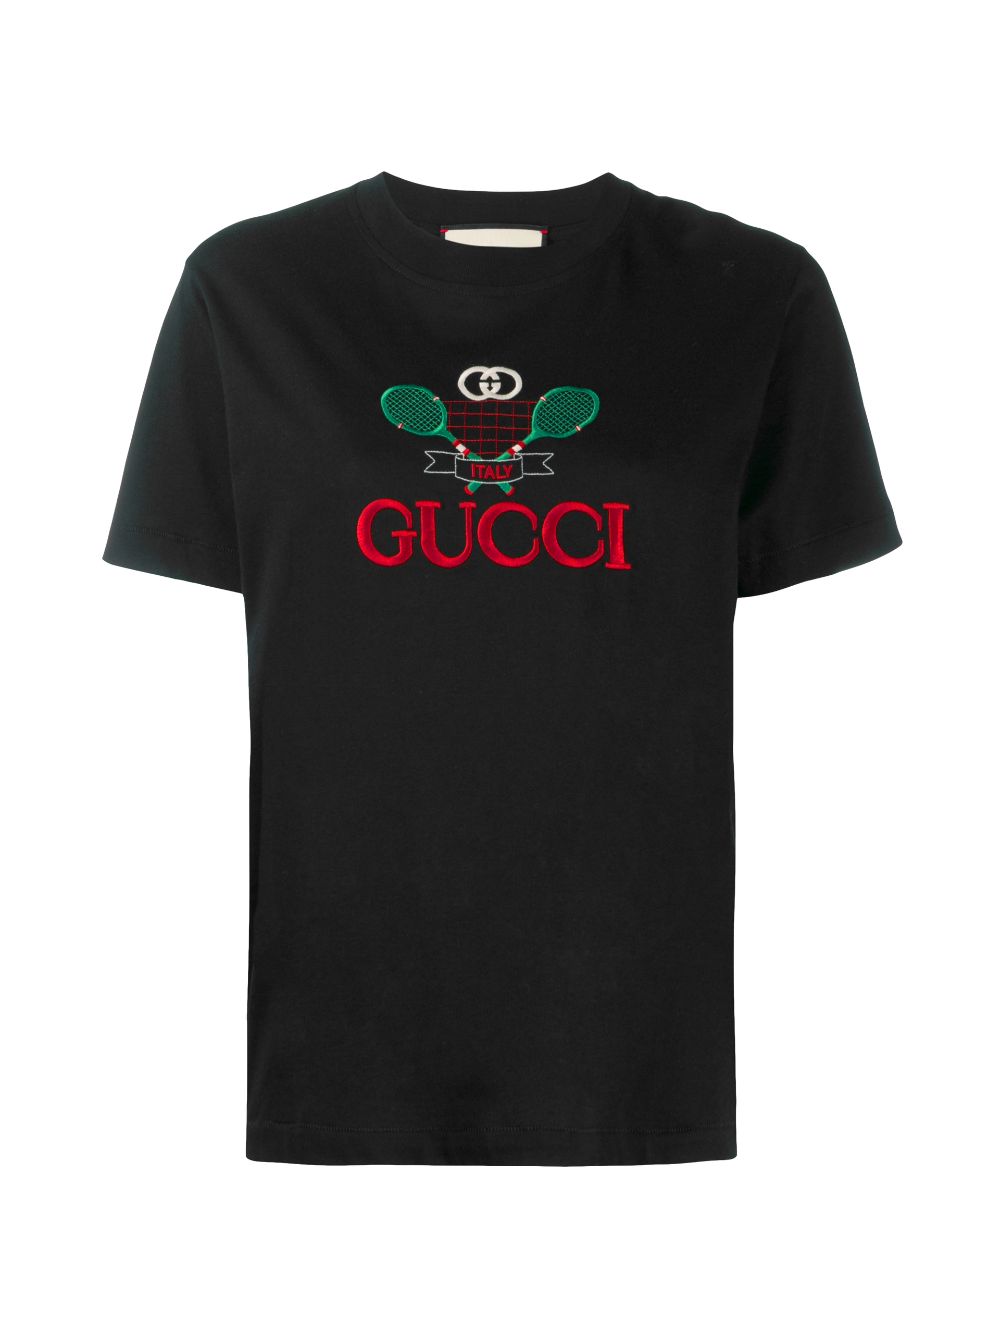 gucci italy tennis shirt